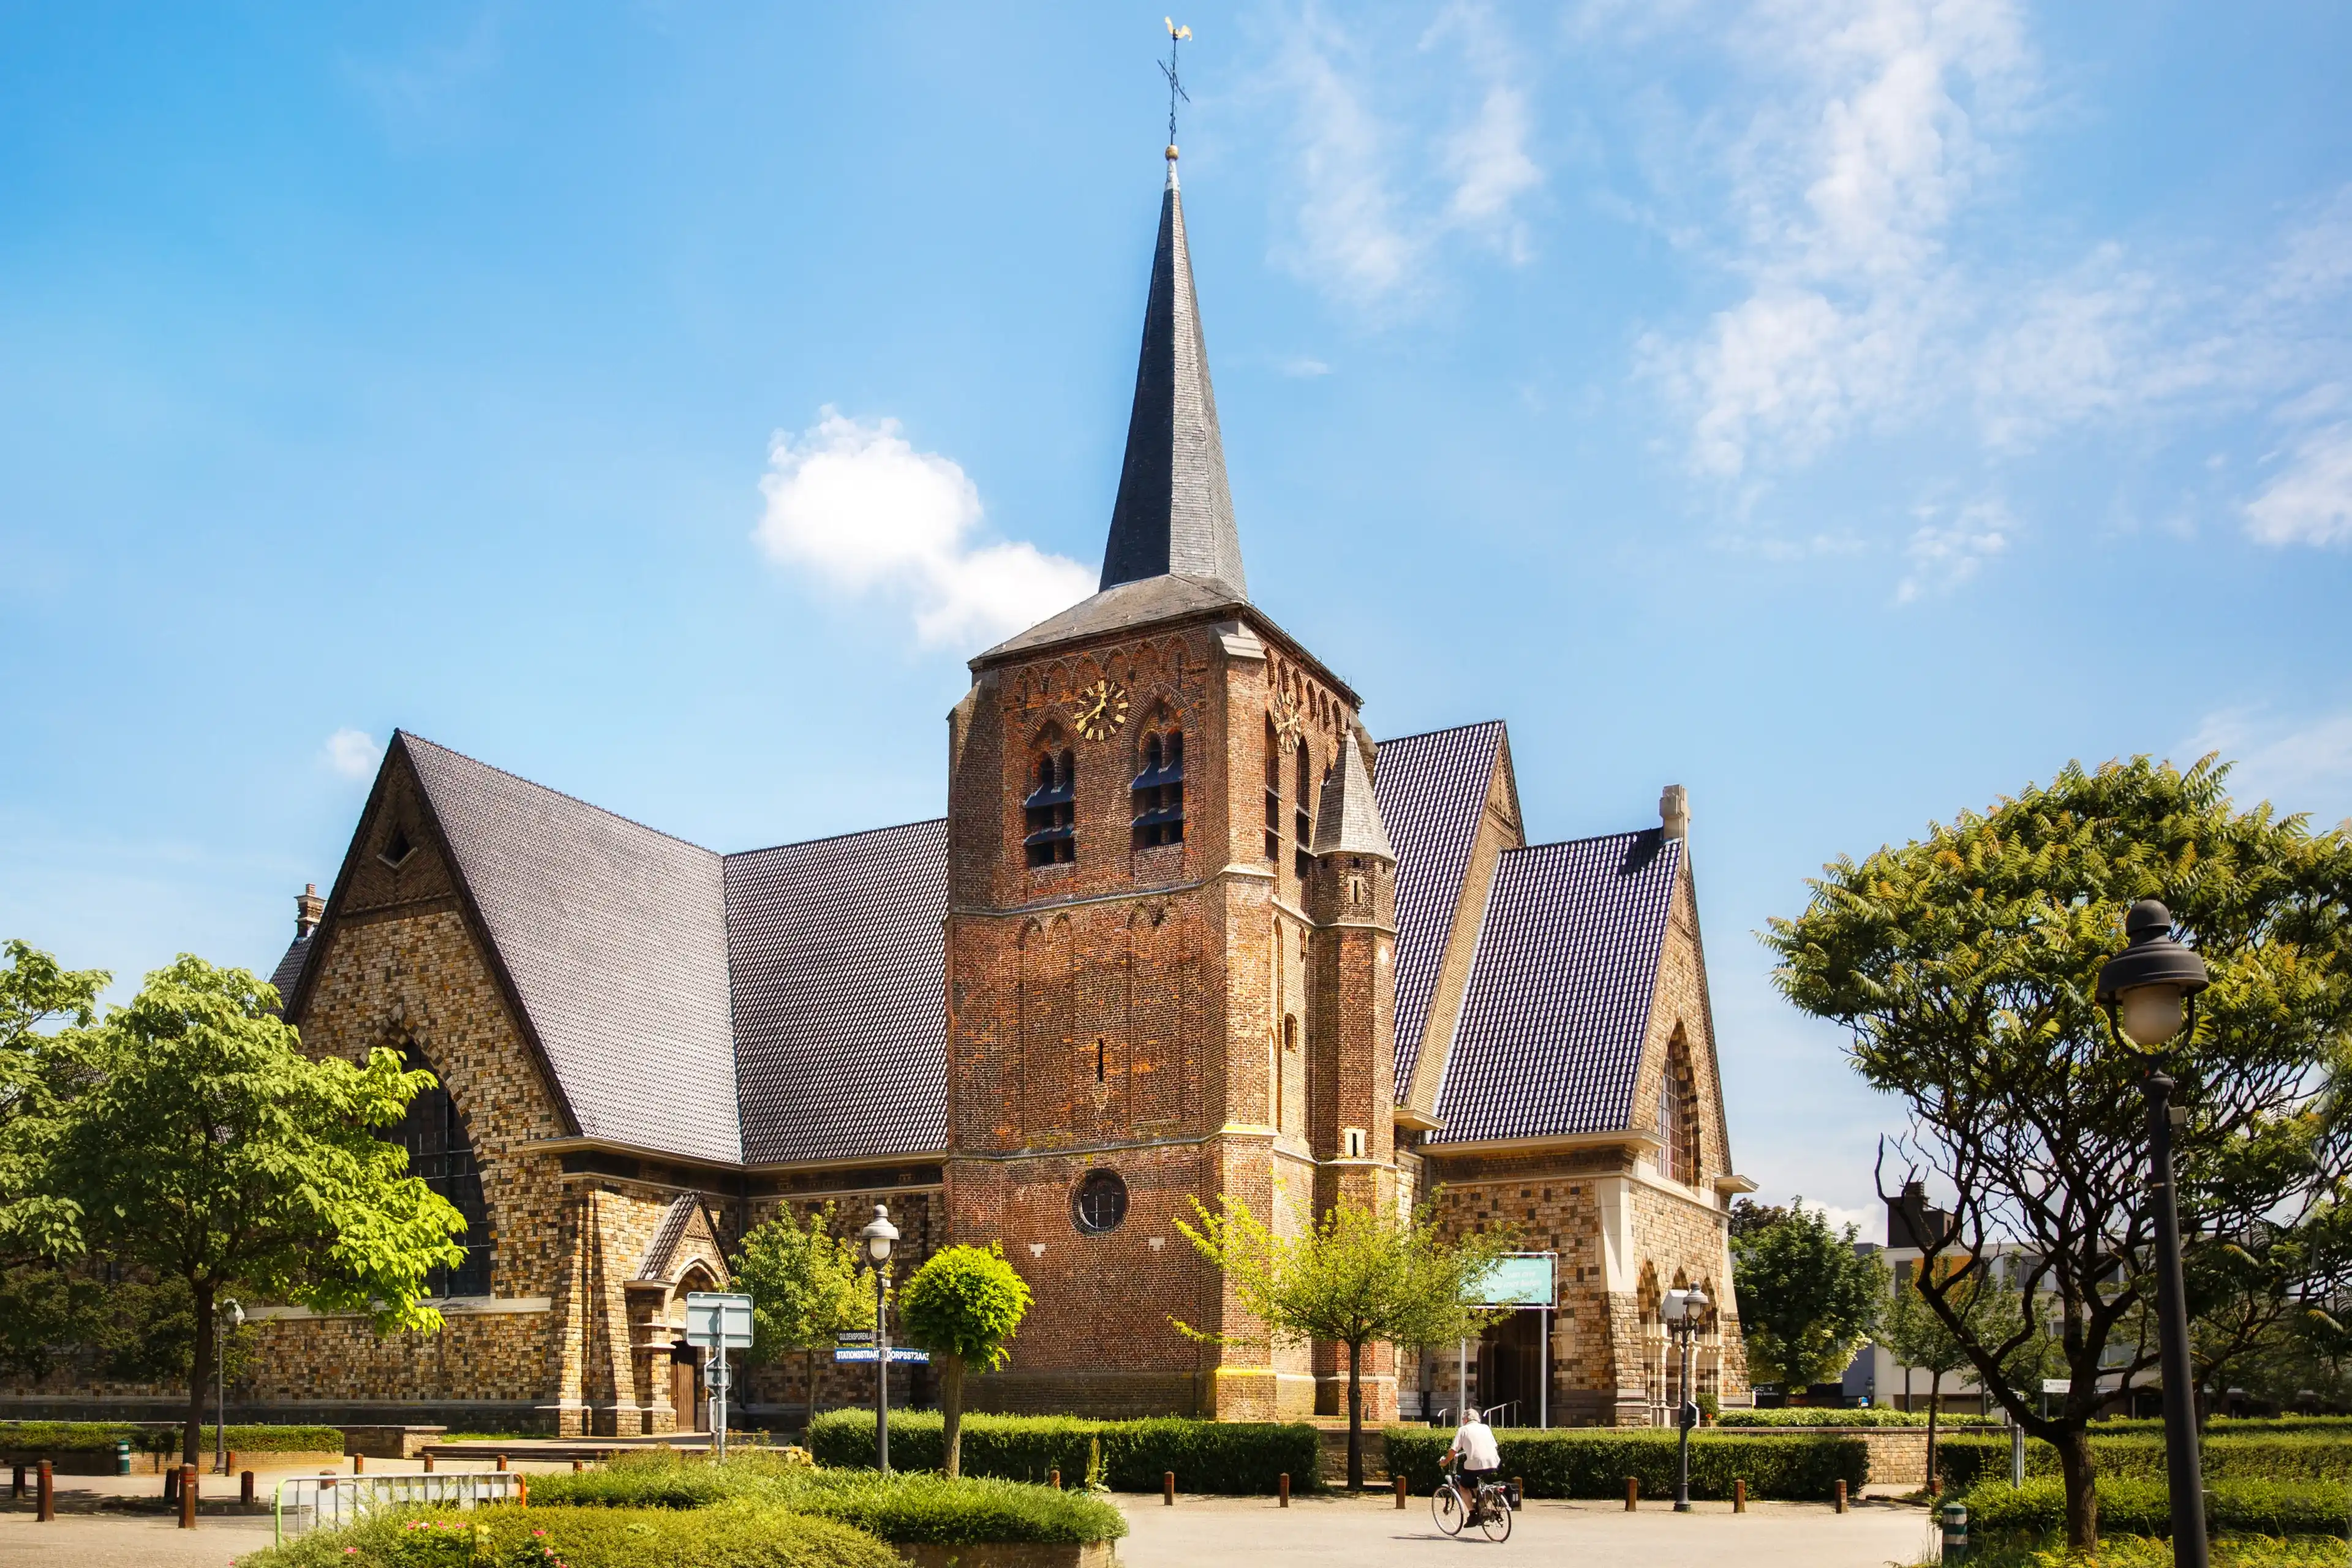 Catholic Church Sint-Martinuskerk in Houthalen-Helchteren, Belgium.